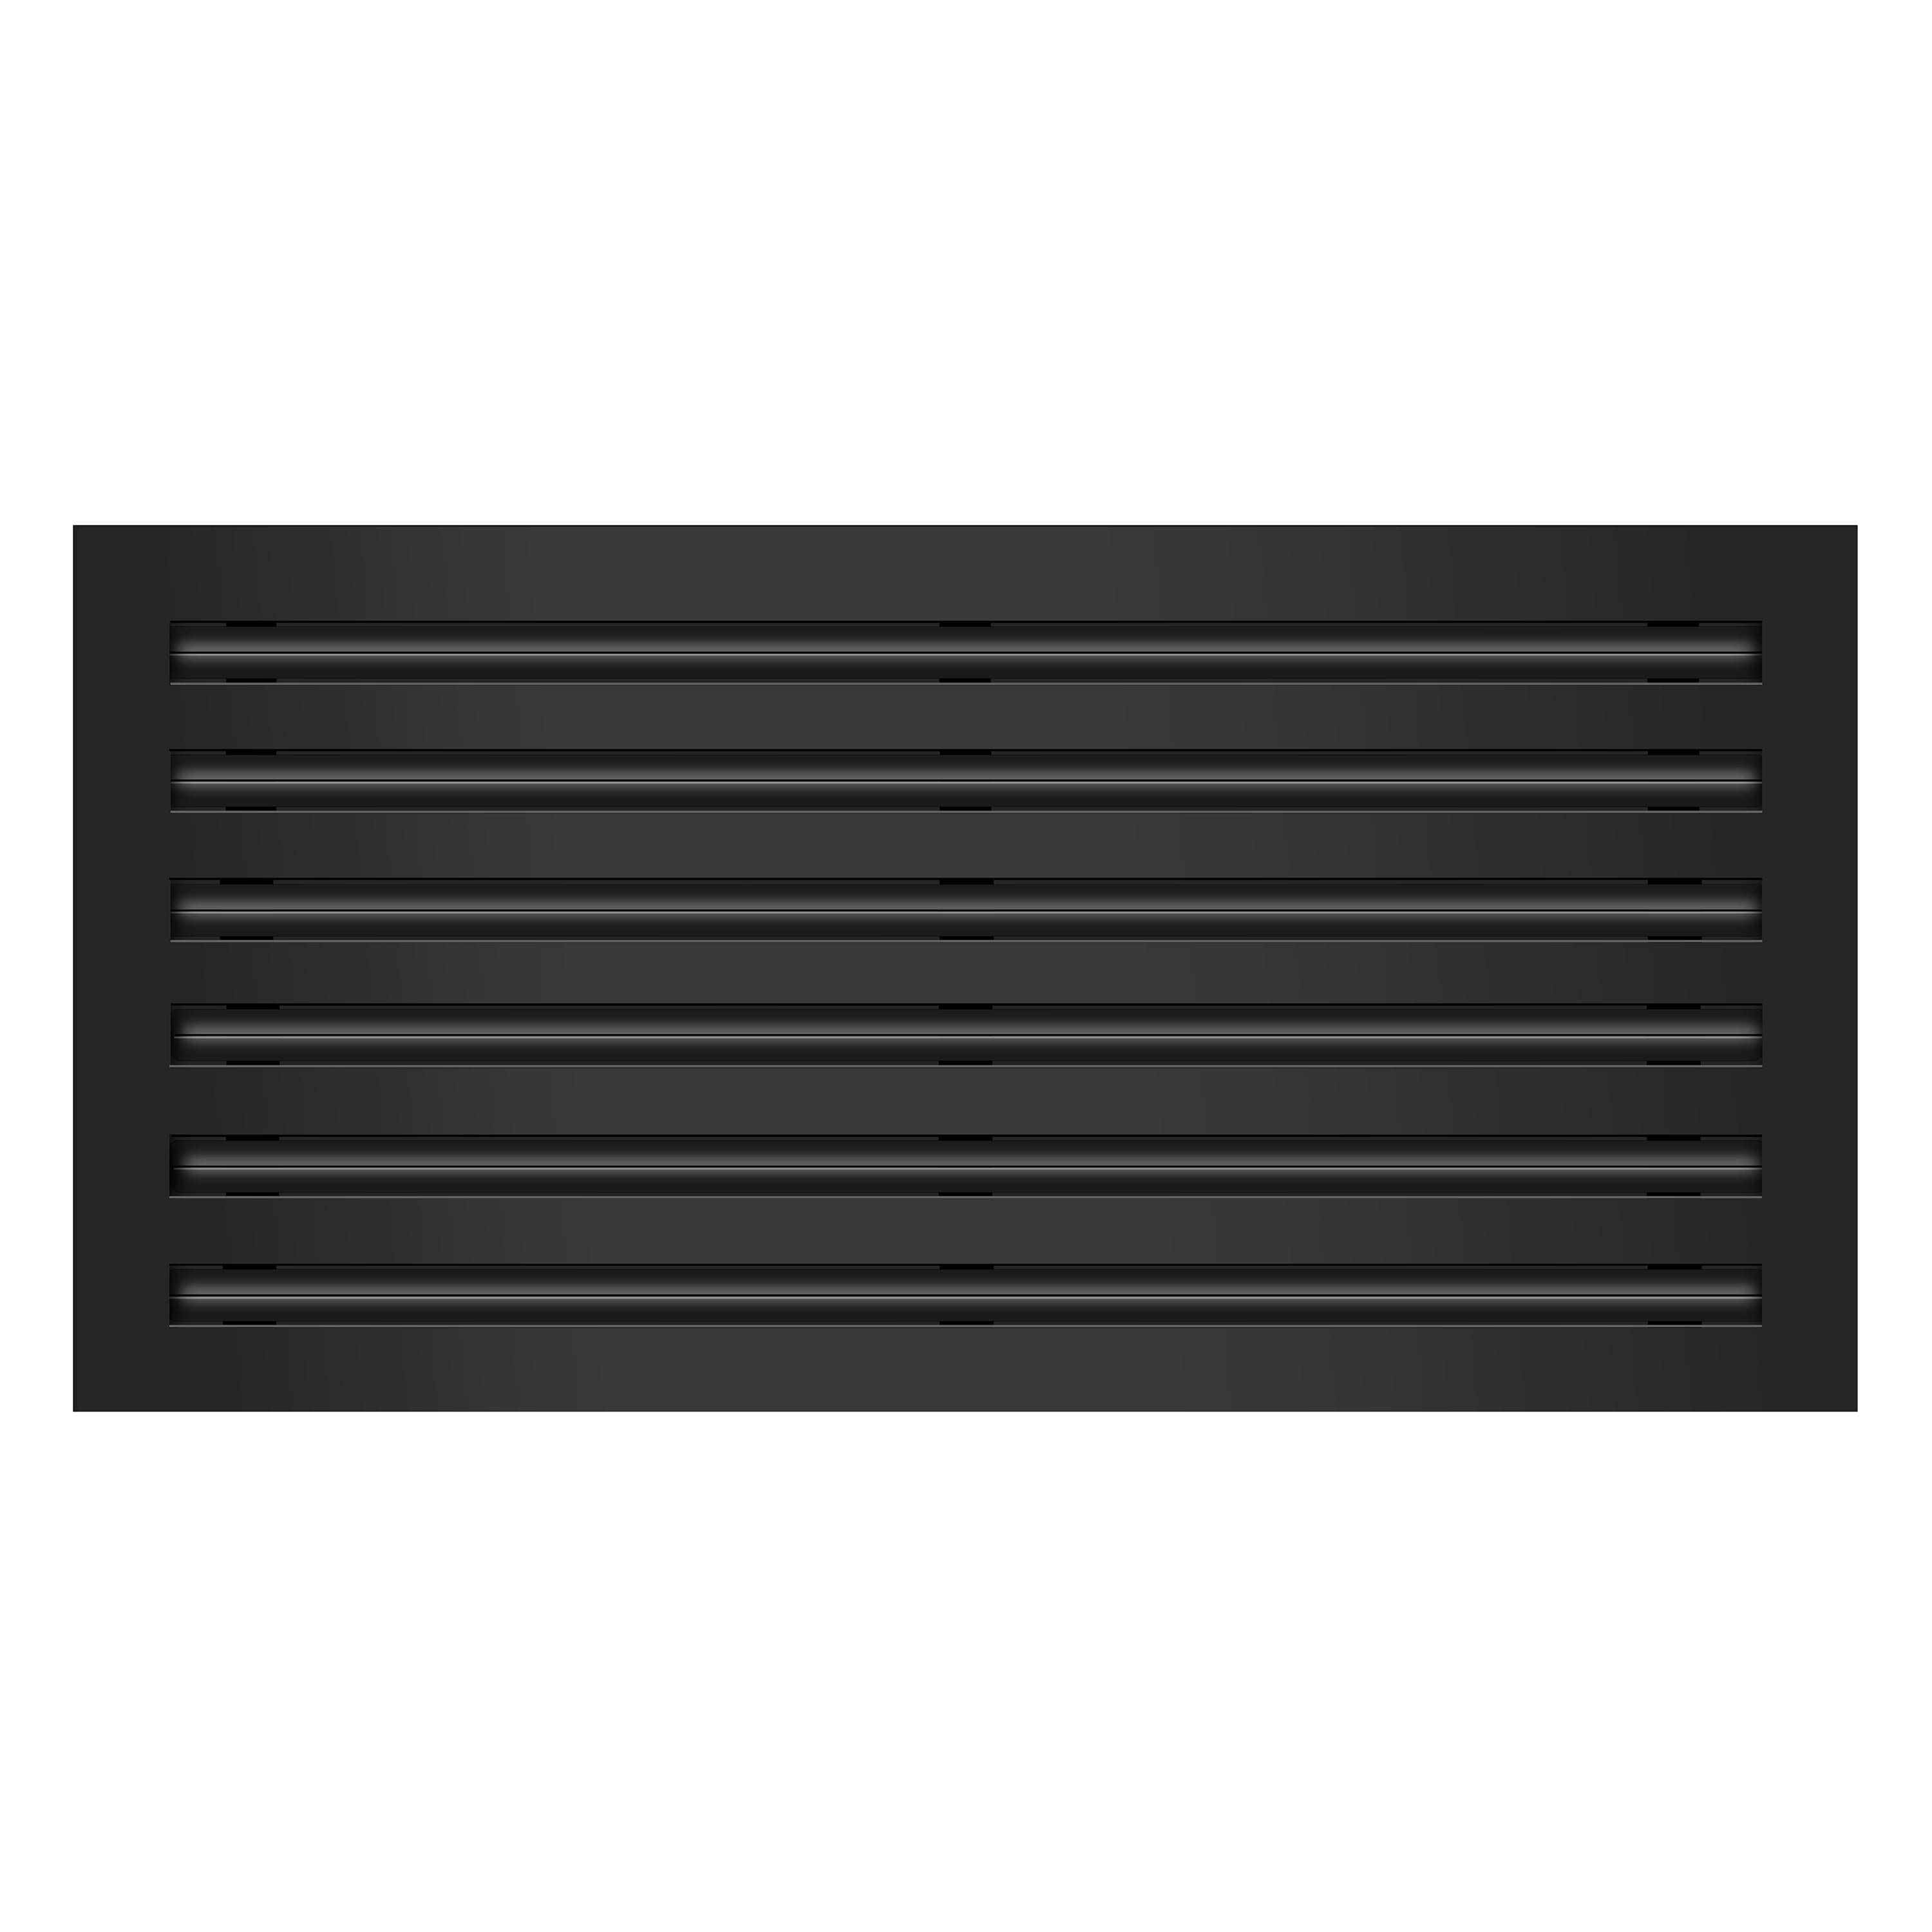 BUILDMART - 24x12 Modern AC Vent Cover - Decorative Black Air Vent - Standard Linear Slot Diffuser -